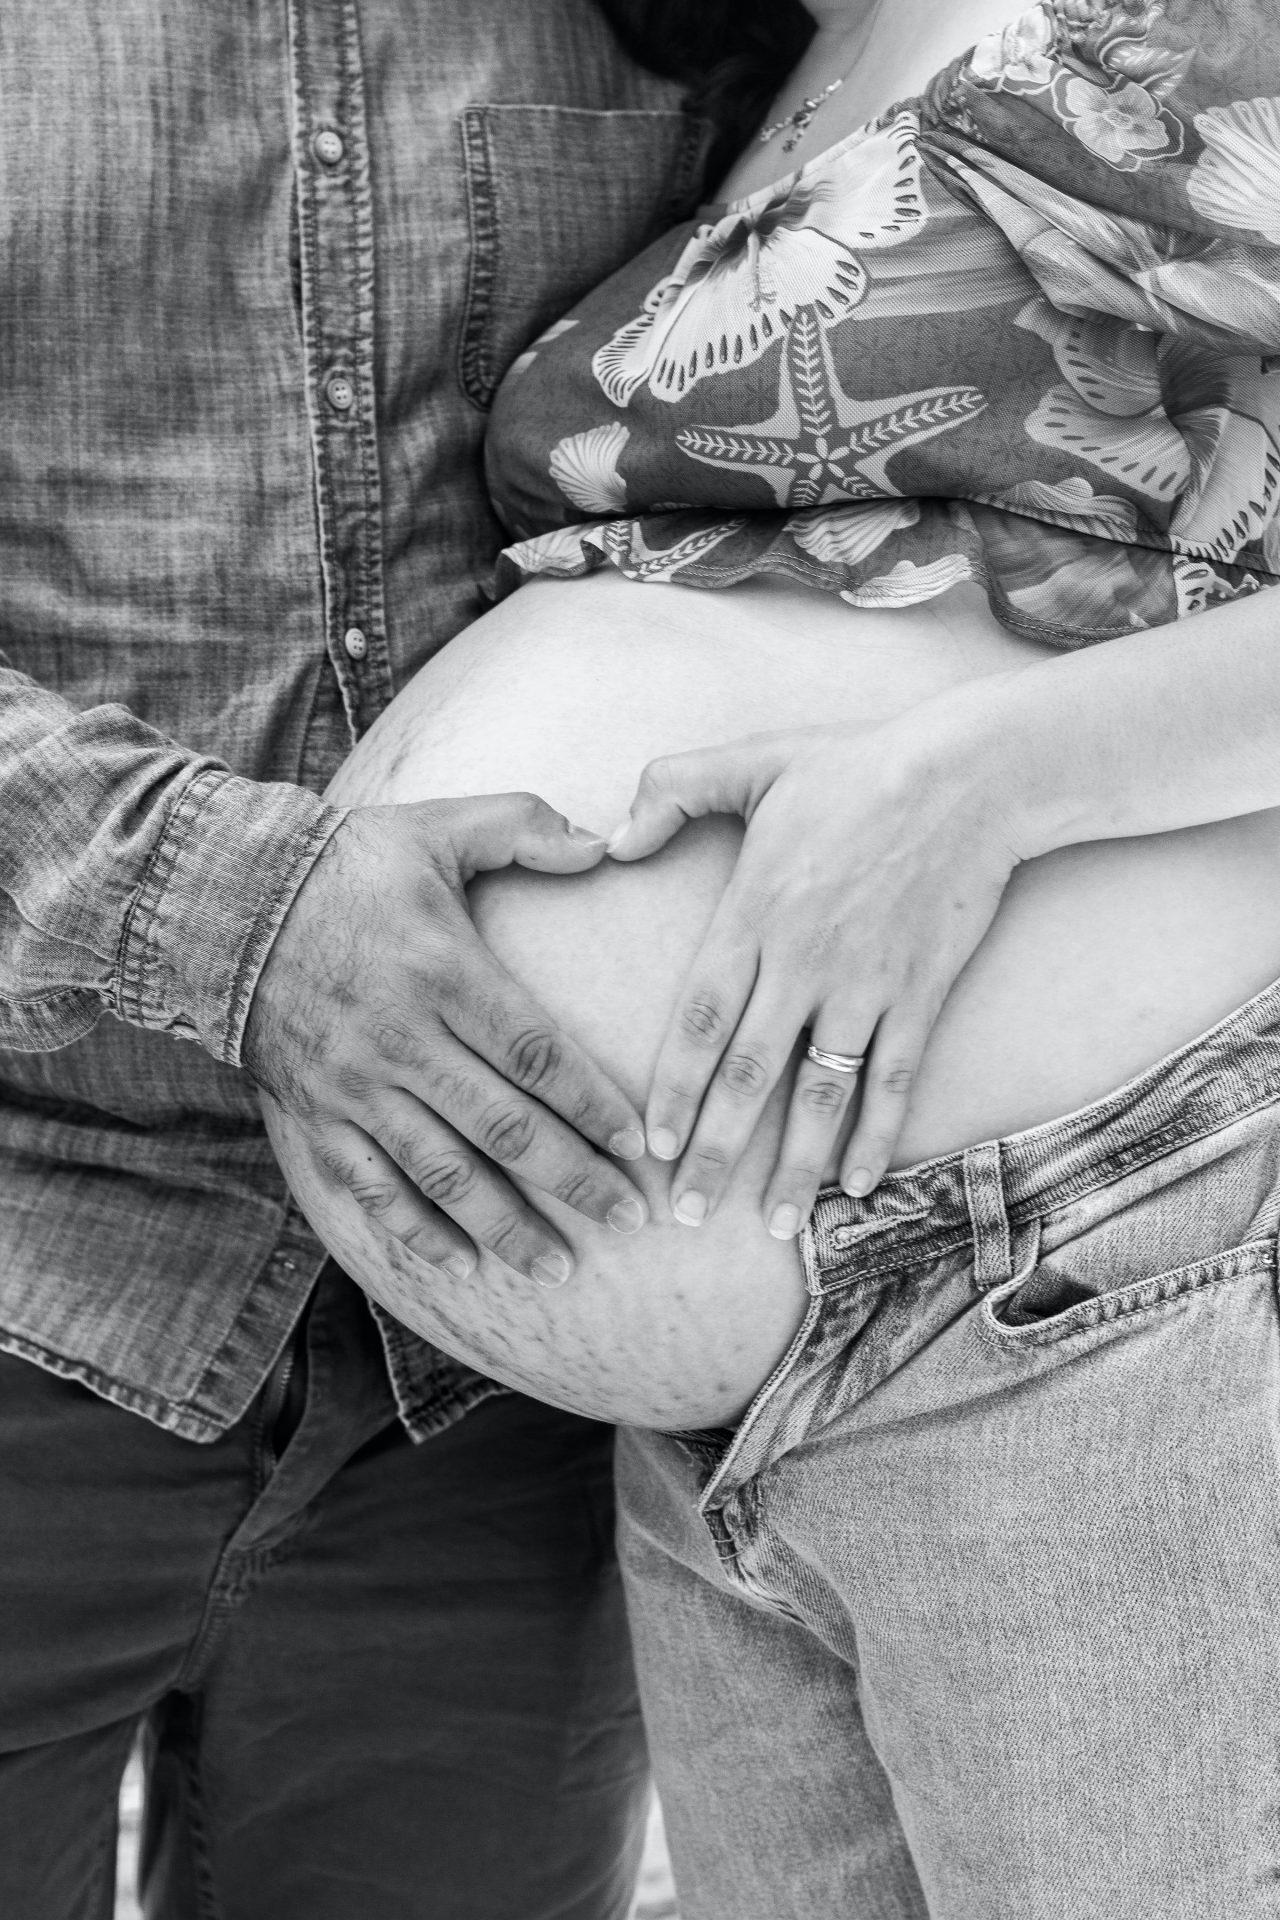 touching a pregnant women's tummy